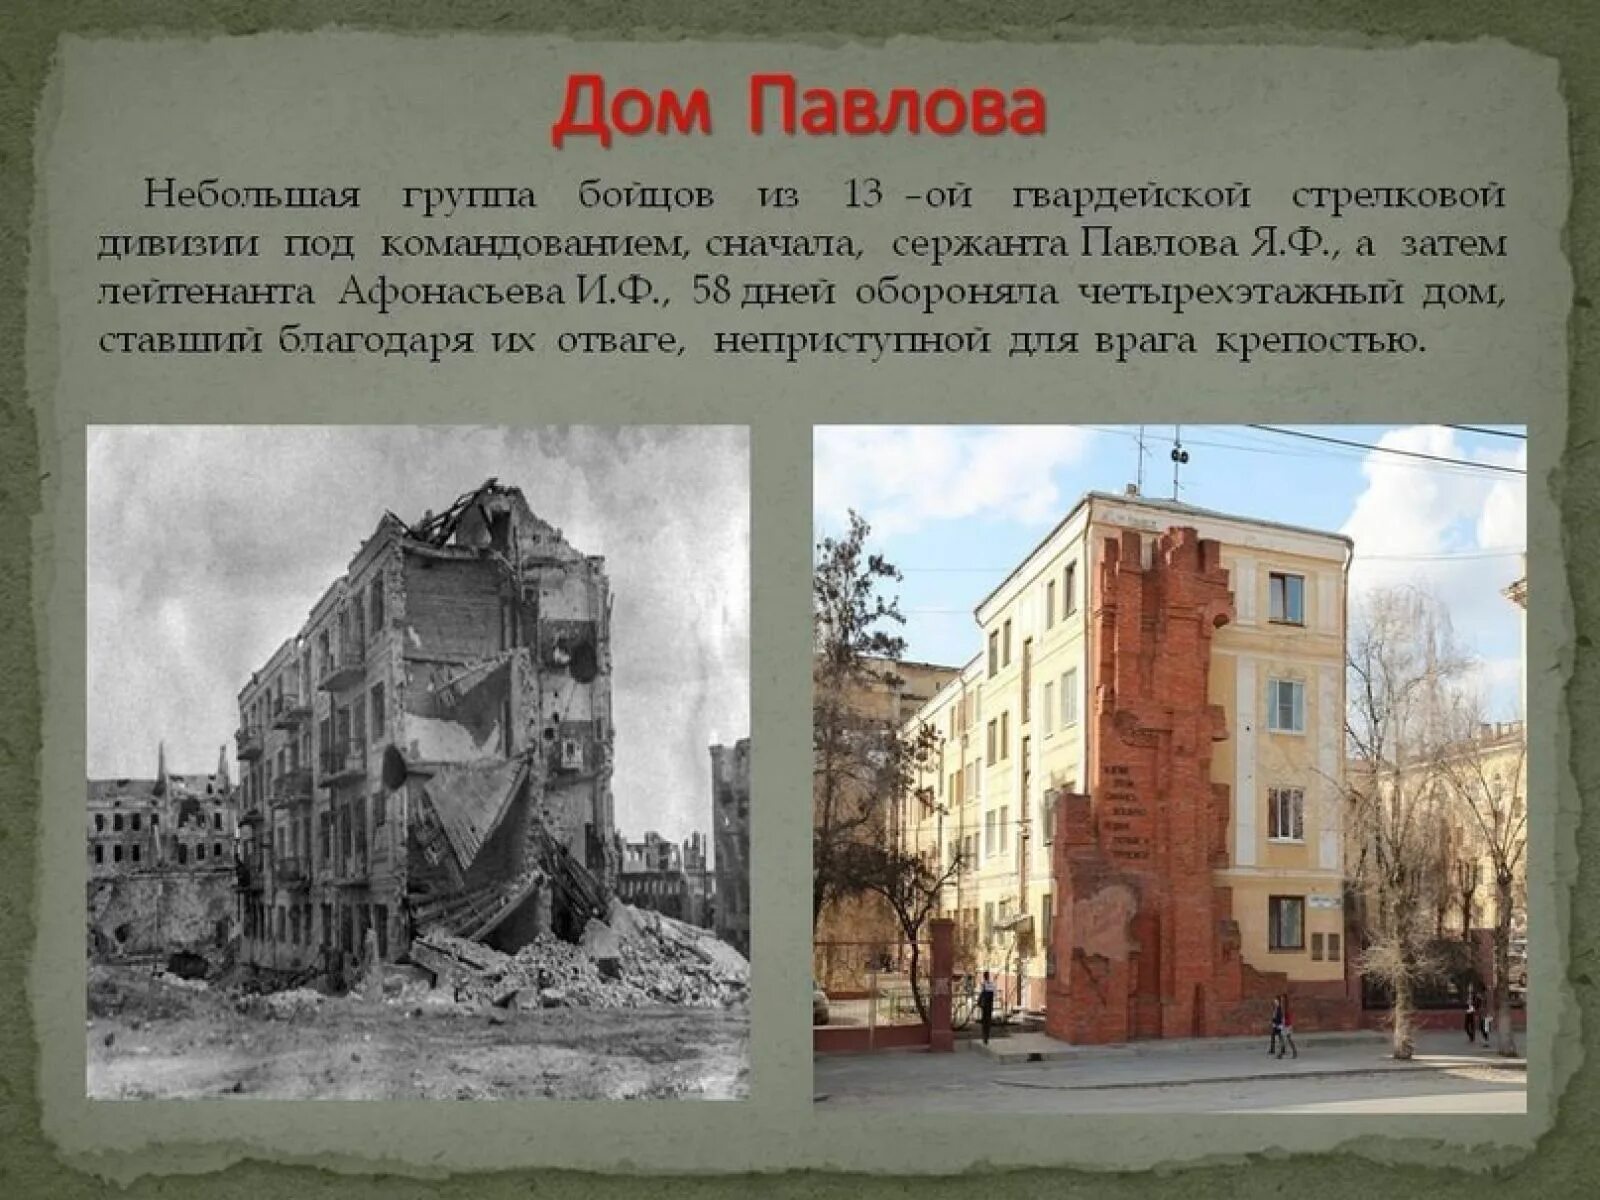 Commemorative Stalingrad pavlov's house